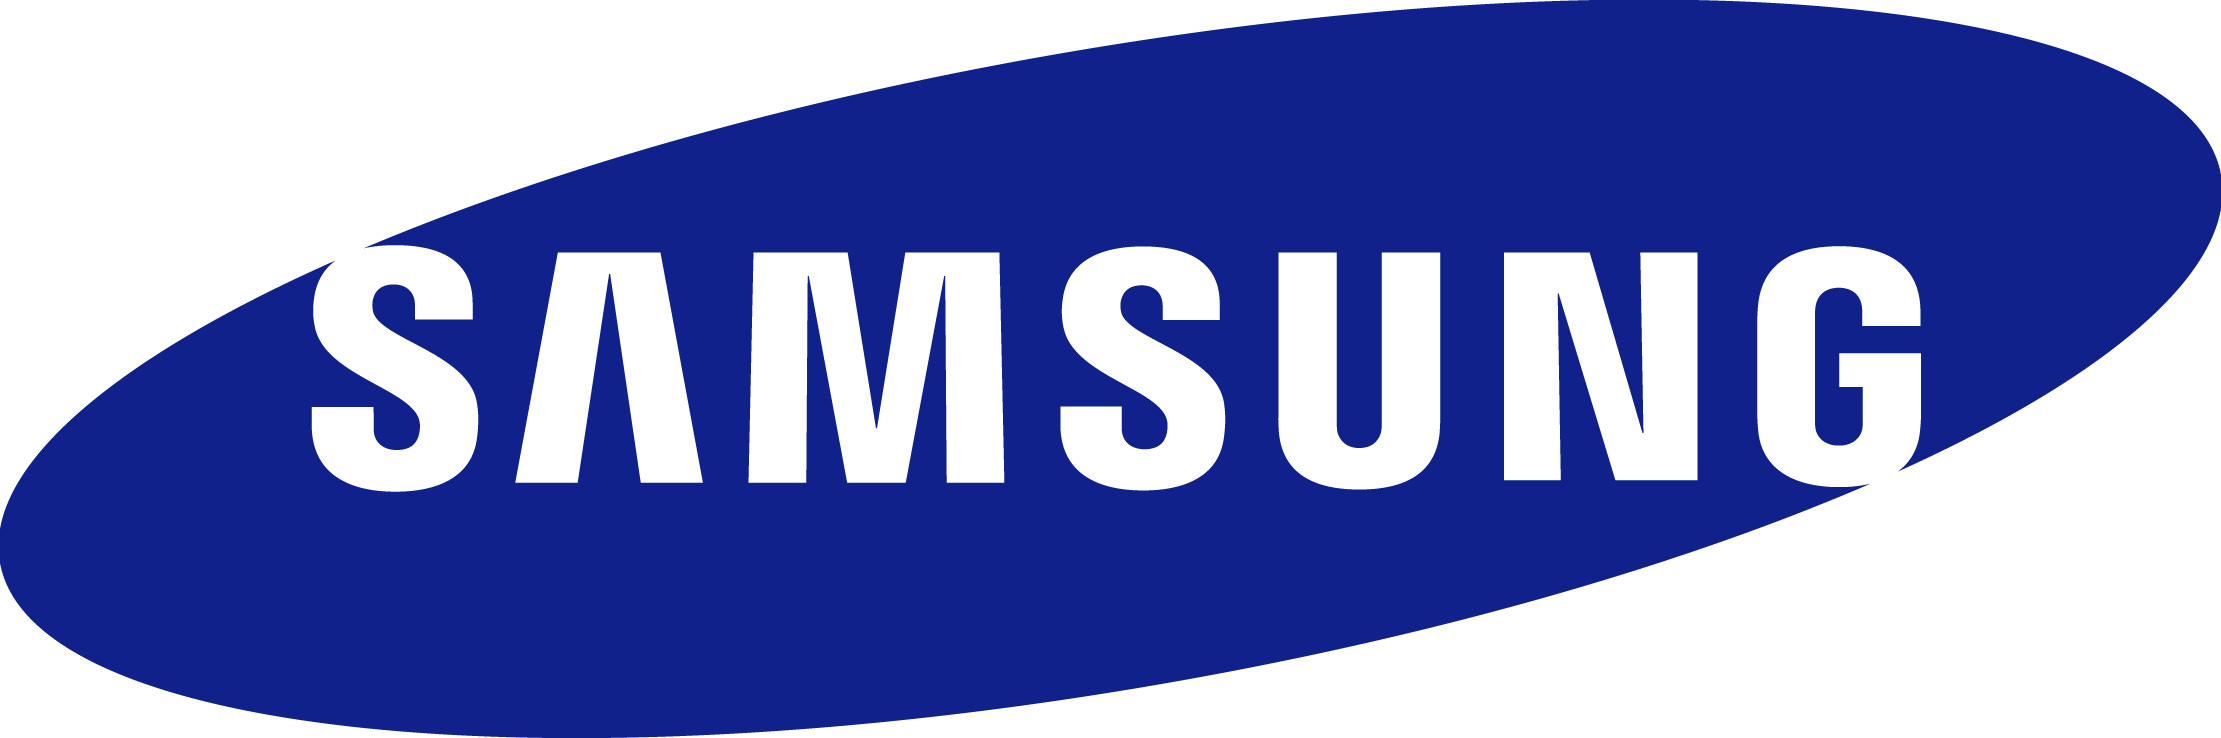 Bénéfice de Samsung, premier recul en 3 ans